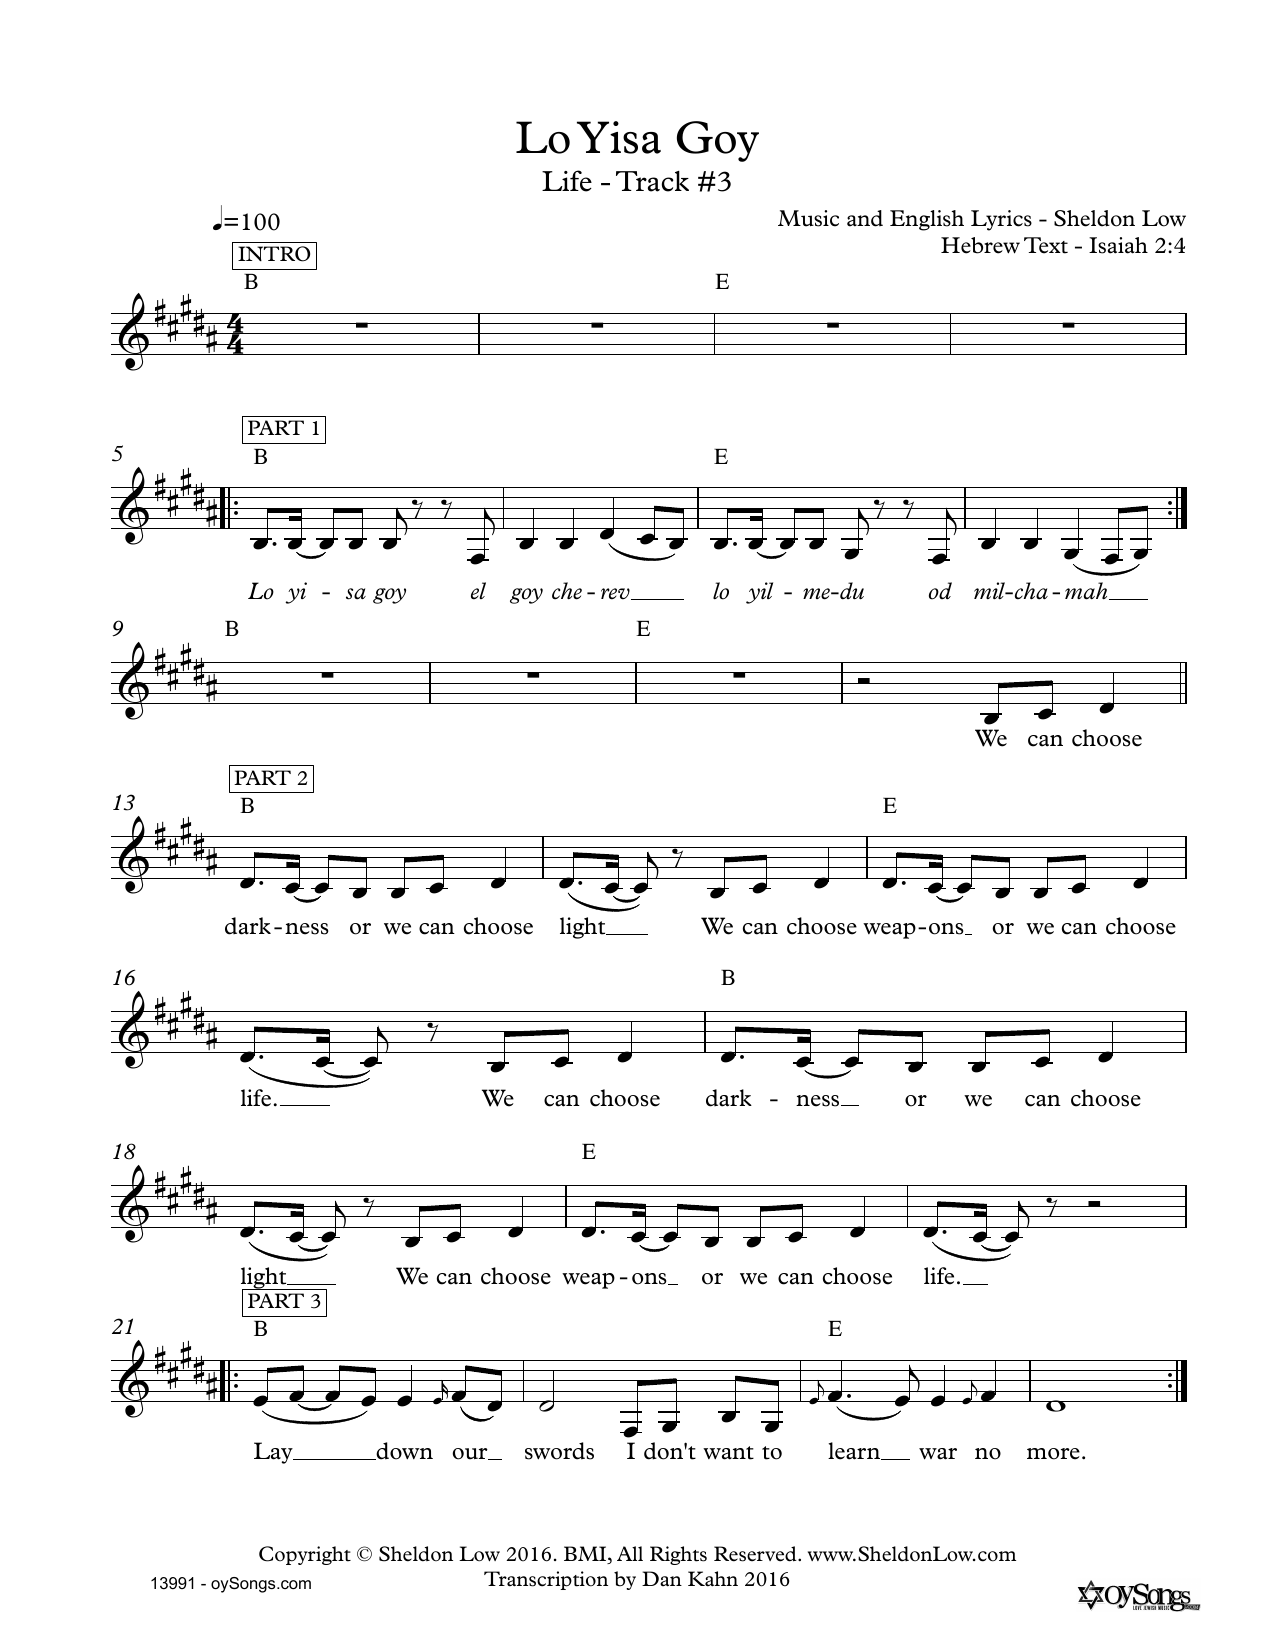 Sheldon Low Lo Yisa Goy Sheet Music Notes & Chords for Lead Sheet / Fake Book - Download or Print PDF